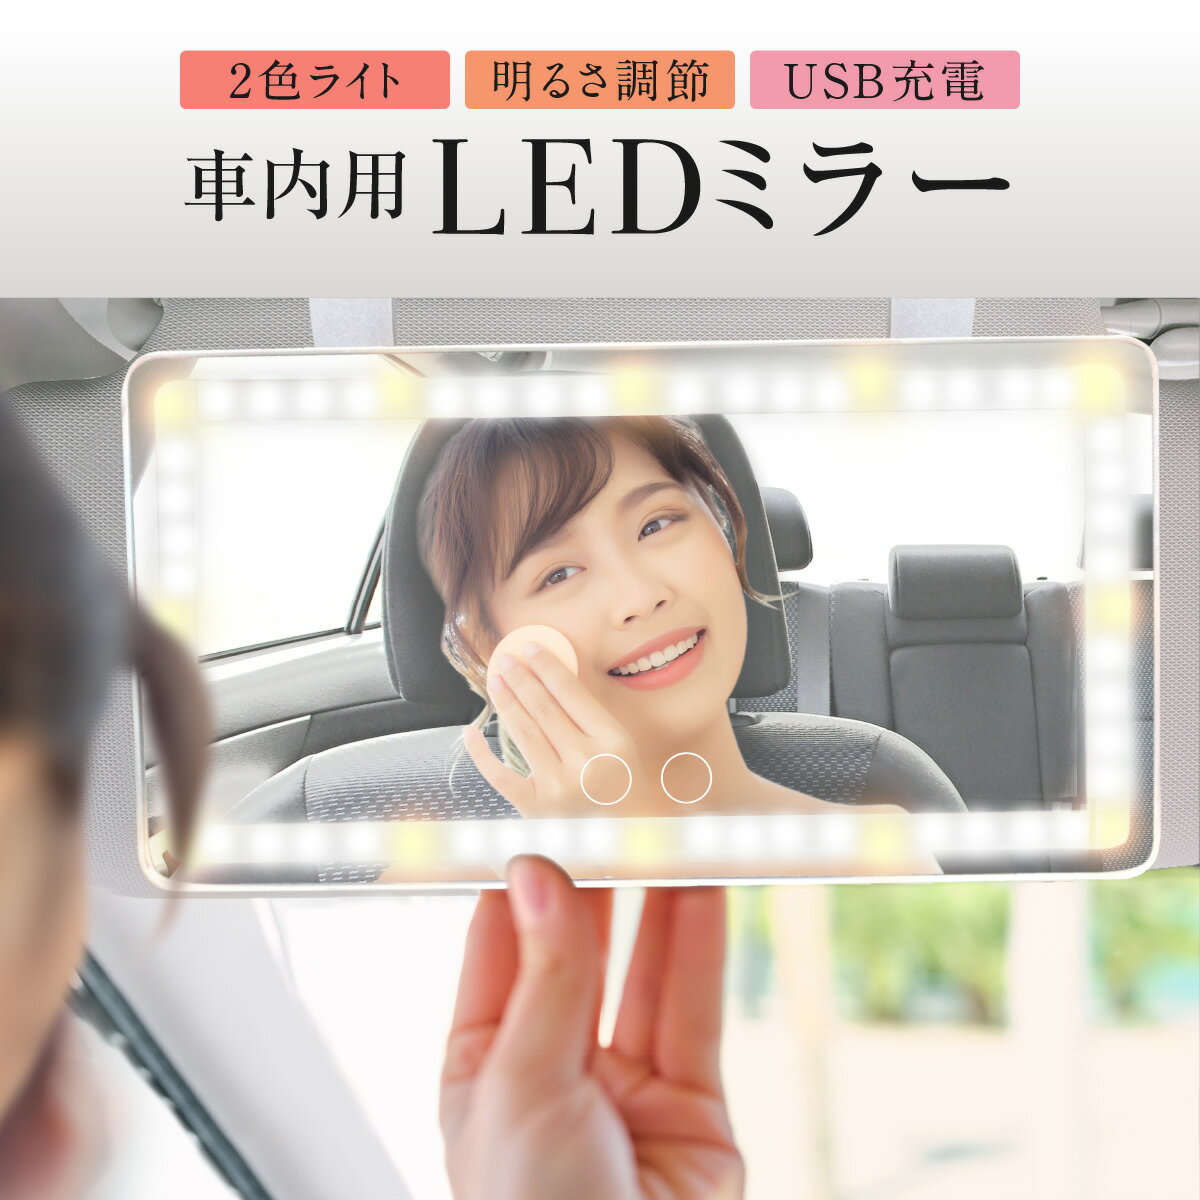 LEDミラー ジアン ルームミラー LEDミラー 車用 車載用 鏡 サンバイザーミラー 女優ミラー 化粧鏡 USB充電 助手席 メインドライバー プレゼント